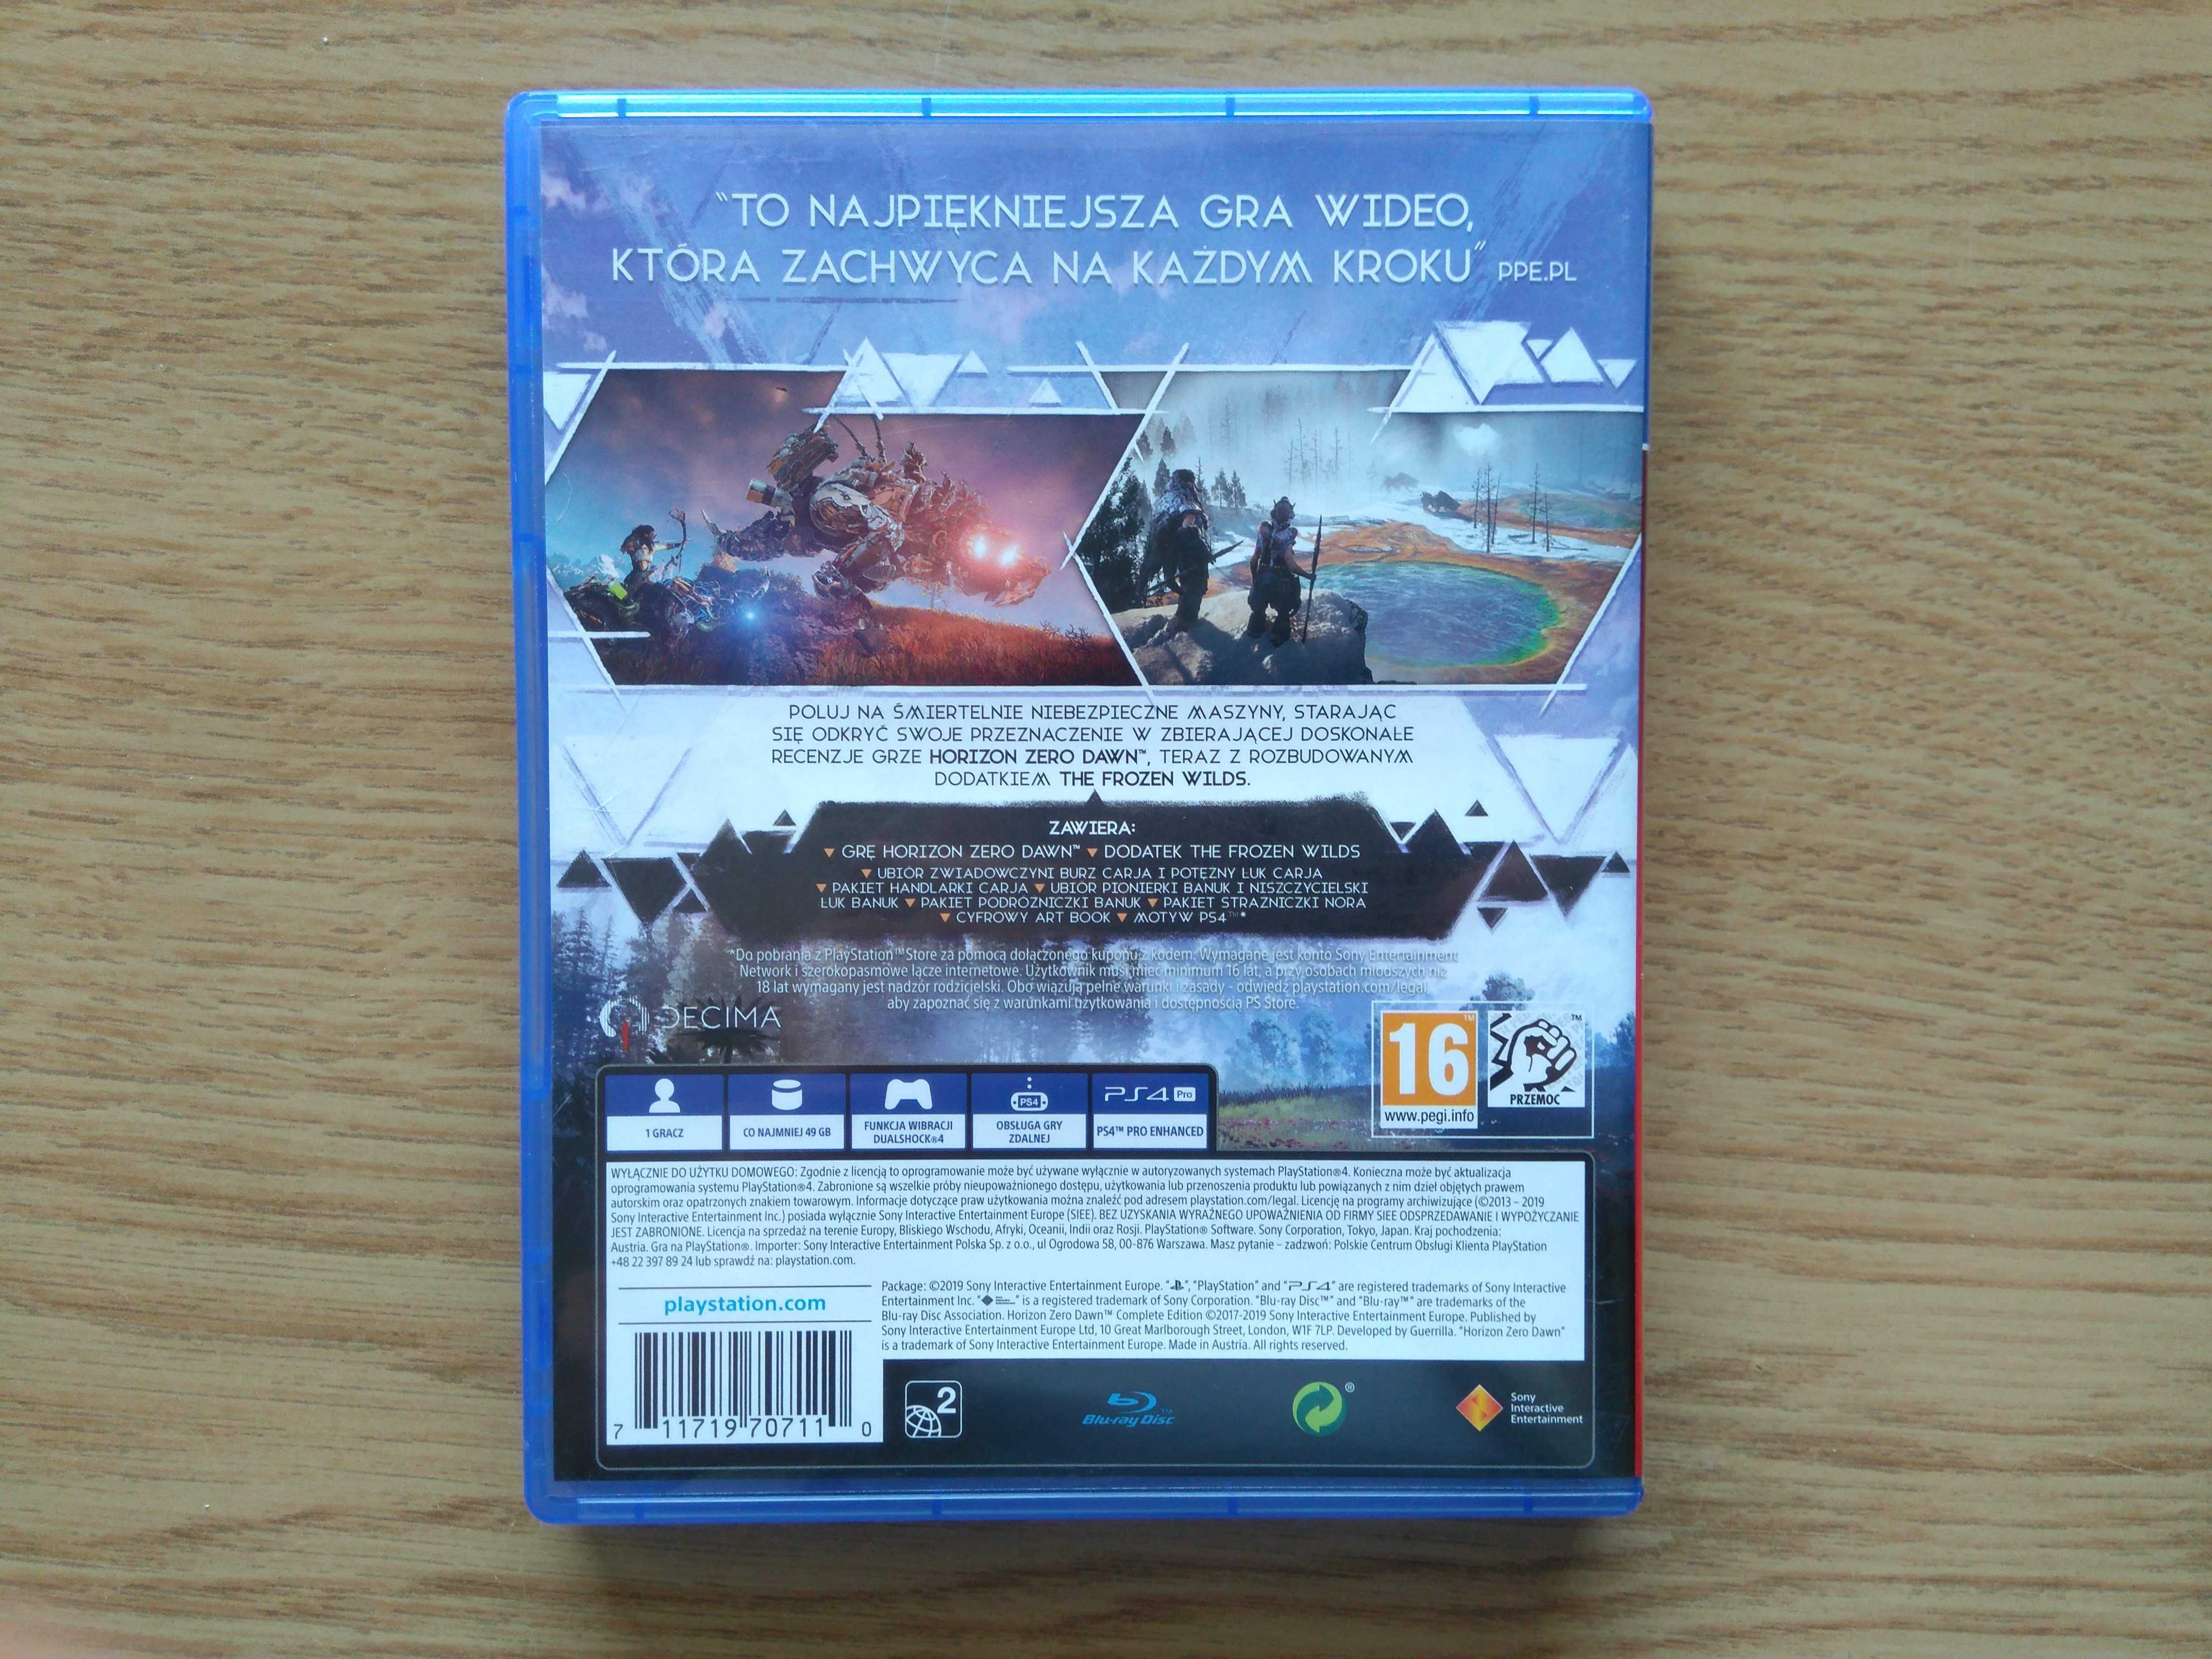 Horizon Zero Down Complete Edition PS4 Playstation 4 PL